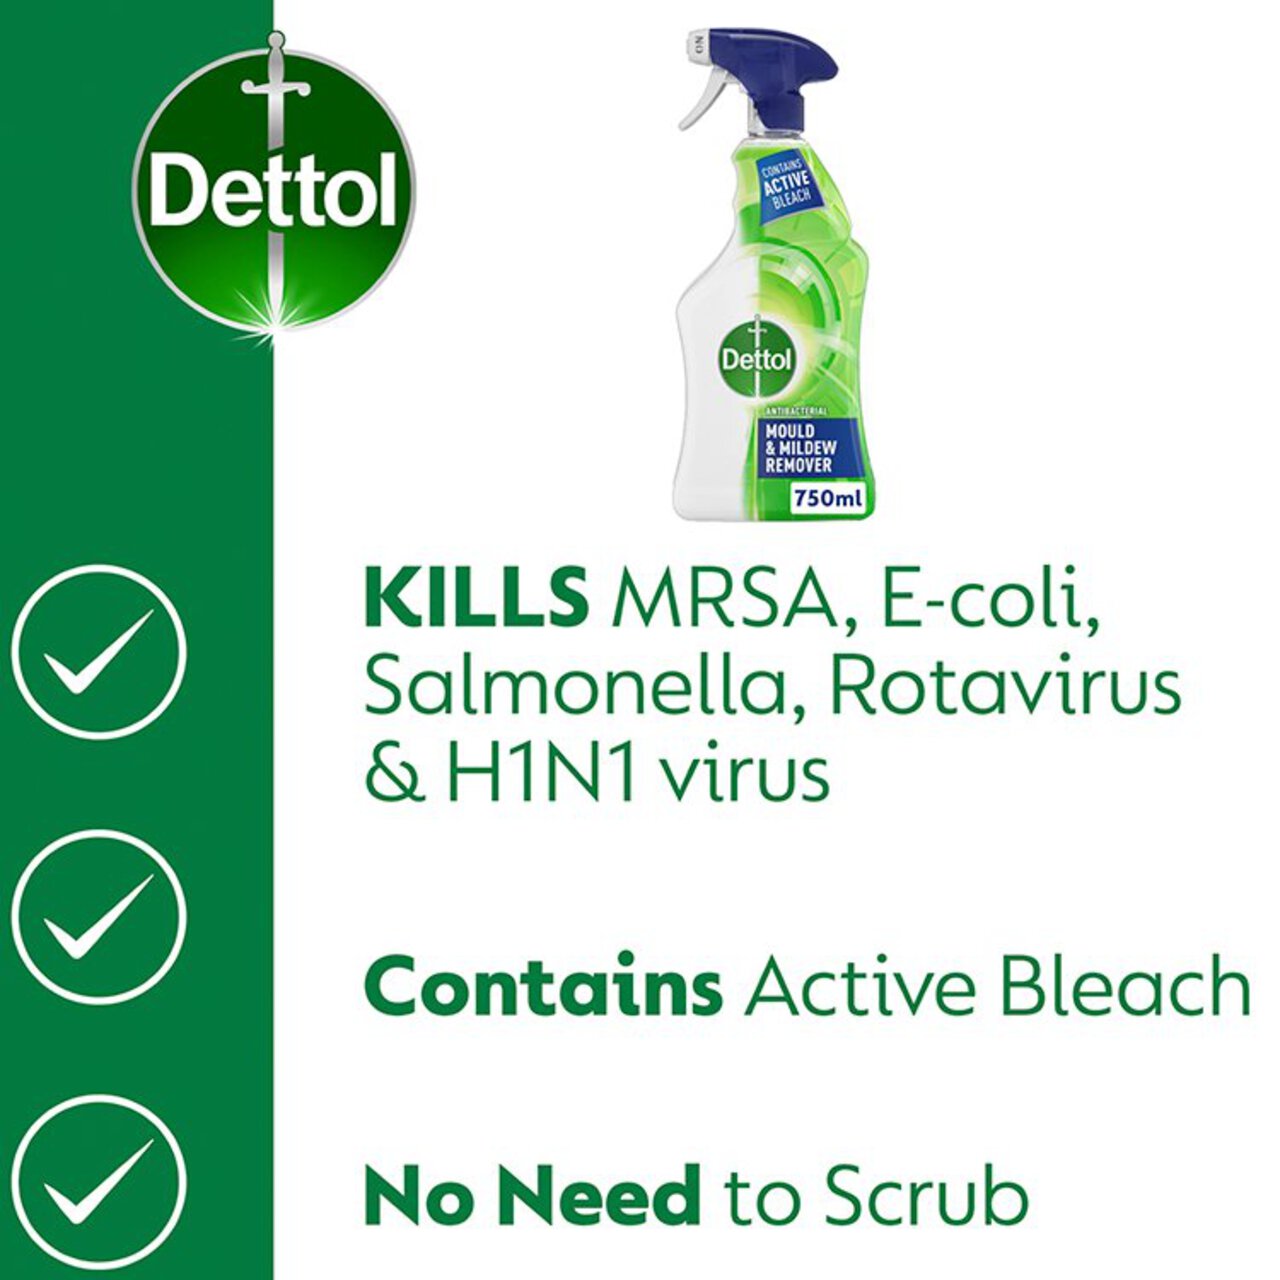 Dettol Antibacterial Mould & Mildew Remover Spray 750ml